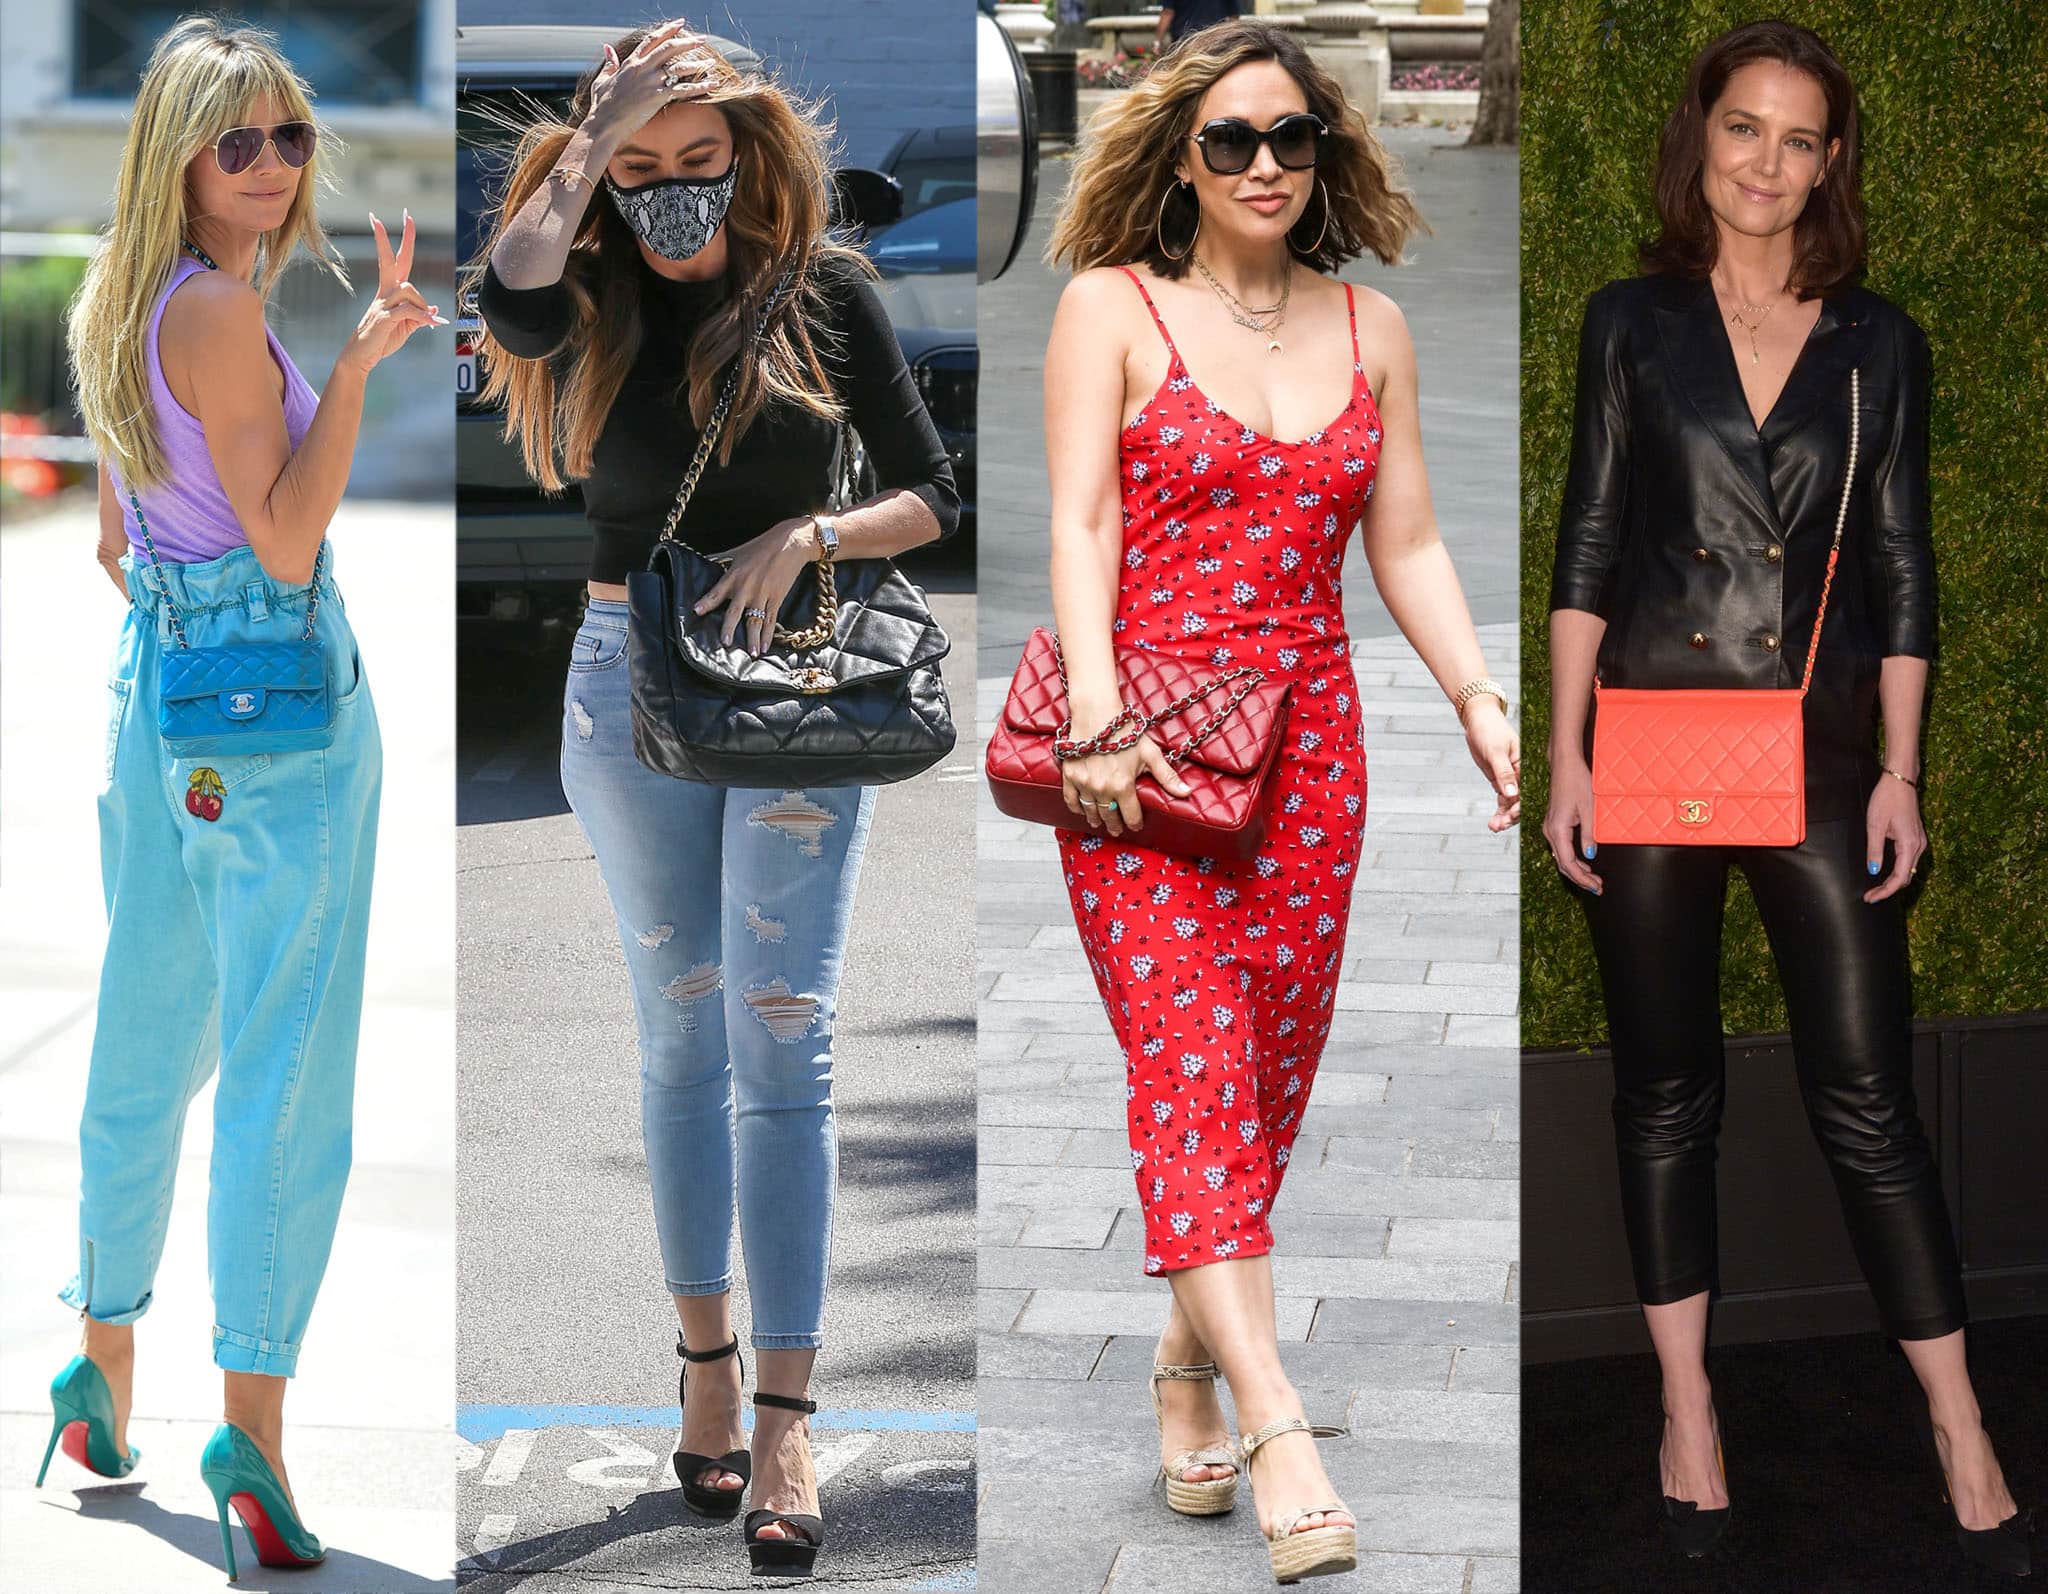 Heidi Klum, Sofia Vergara, Myleene Klass, and Katie Holmes carrying Chanel bags